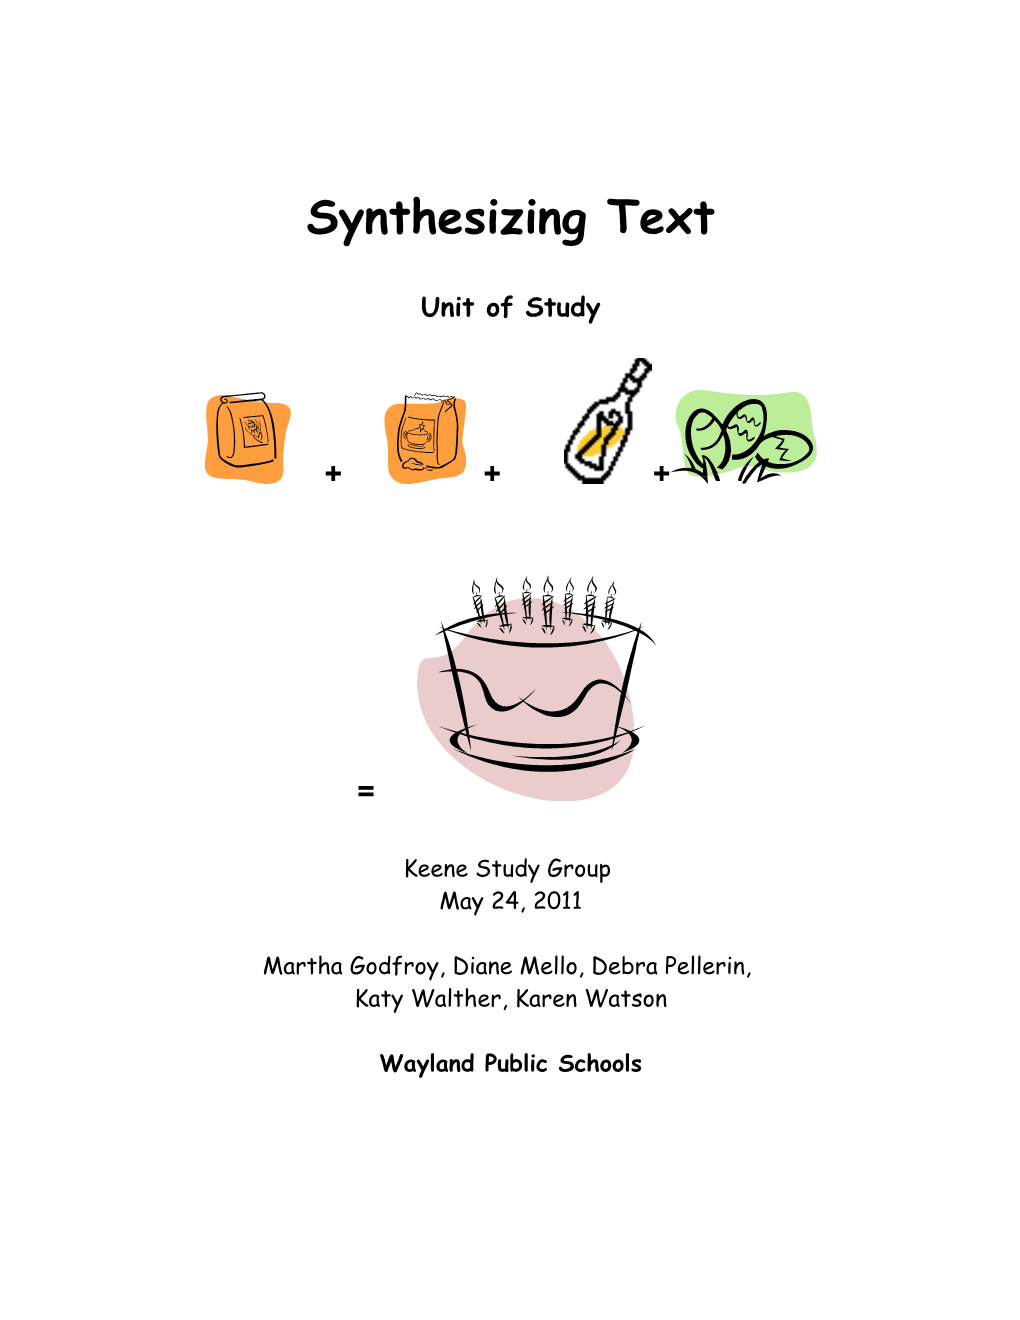 Unit of Study: Synthesizing Text